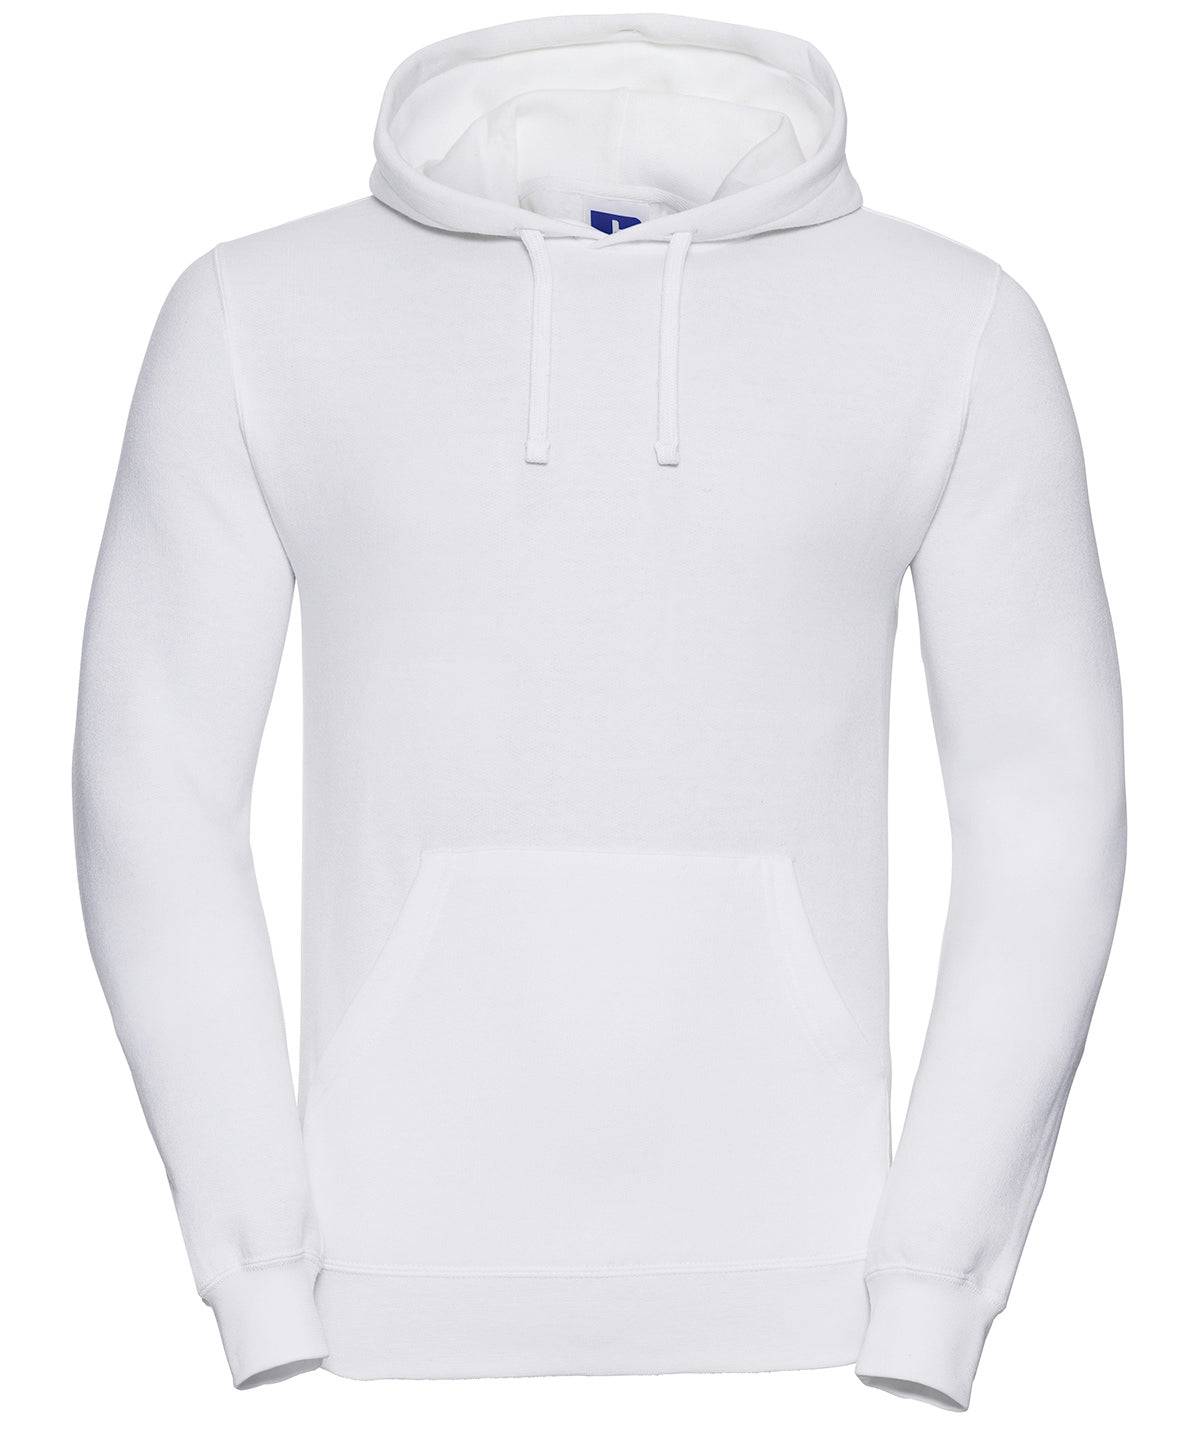 White - Hooded sweatshirt